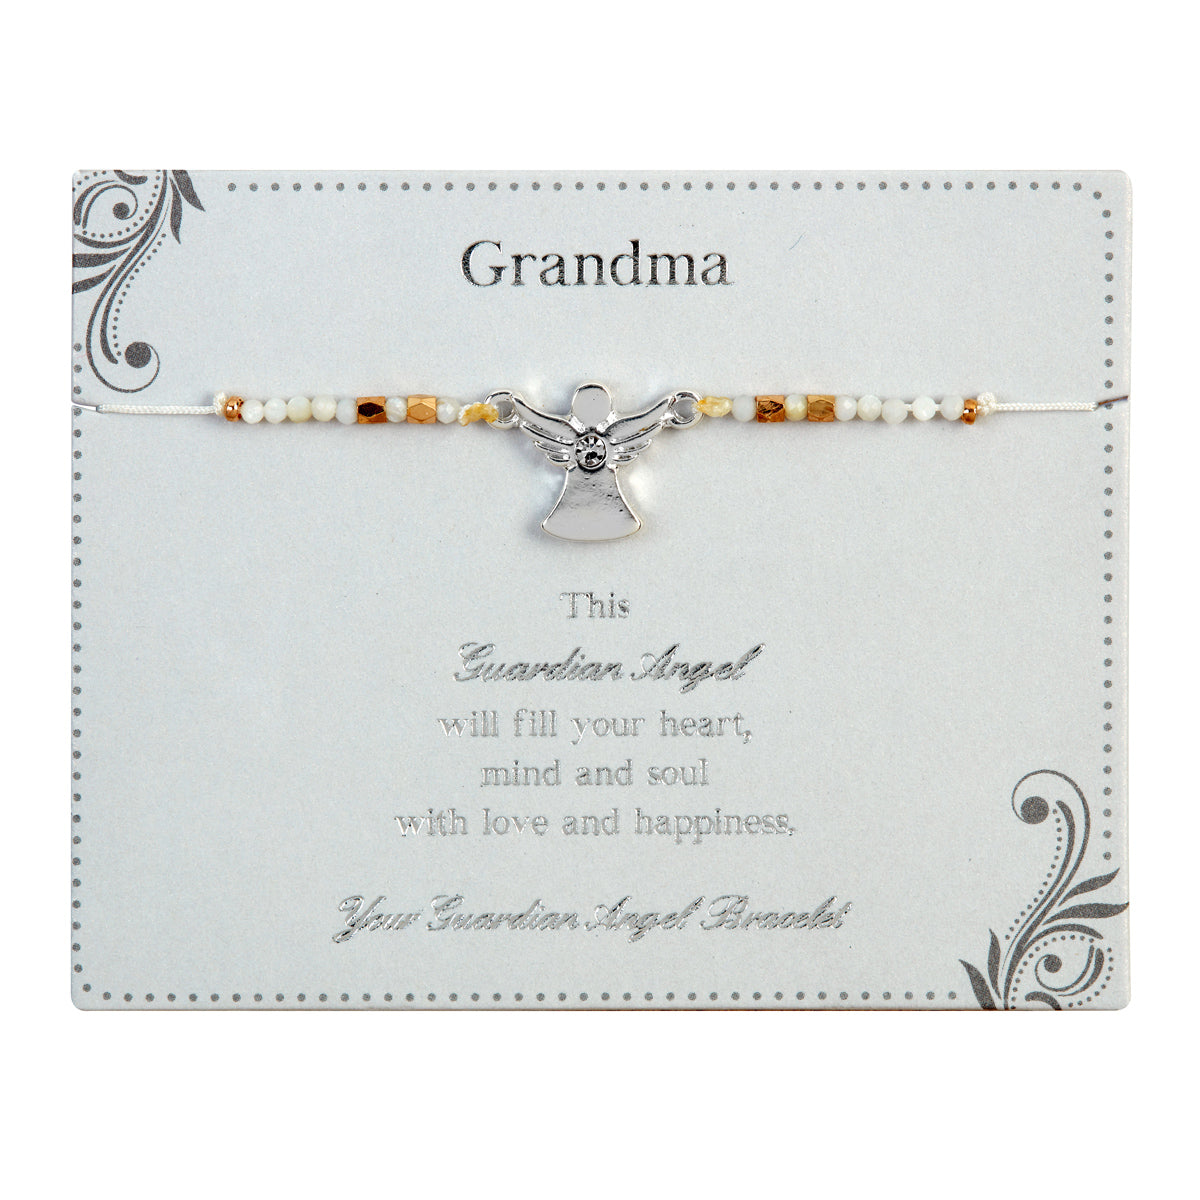 Grandma Guardian Angel Bracelet On Beaded String With Envelope